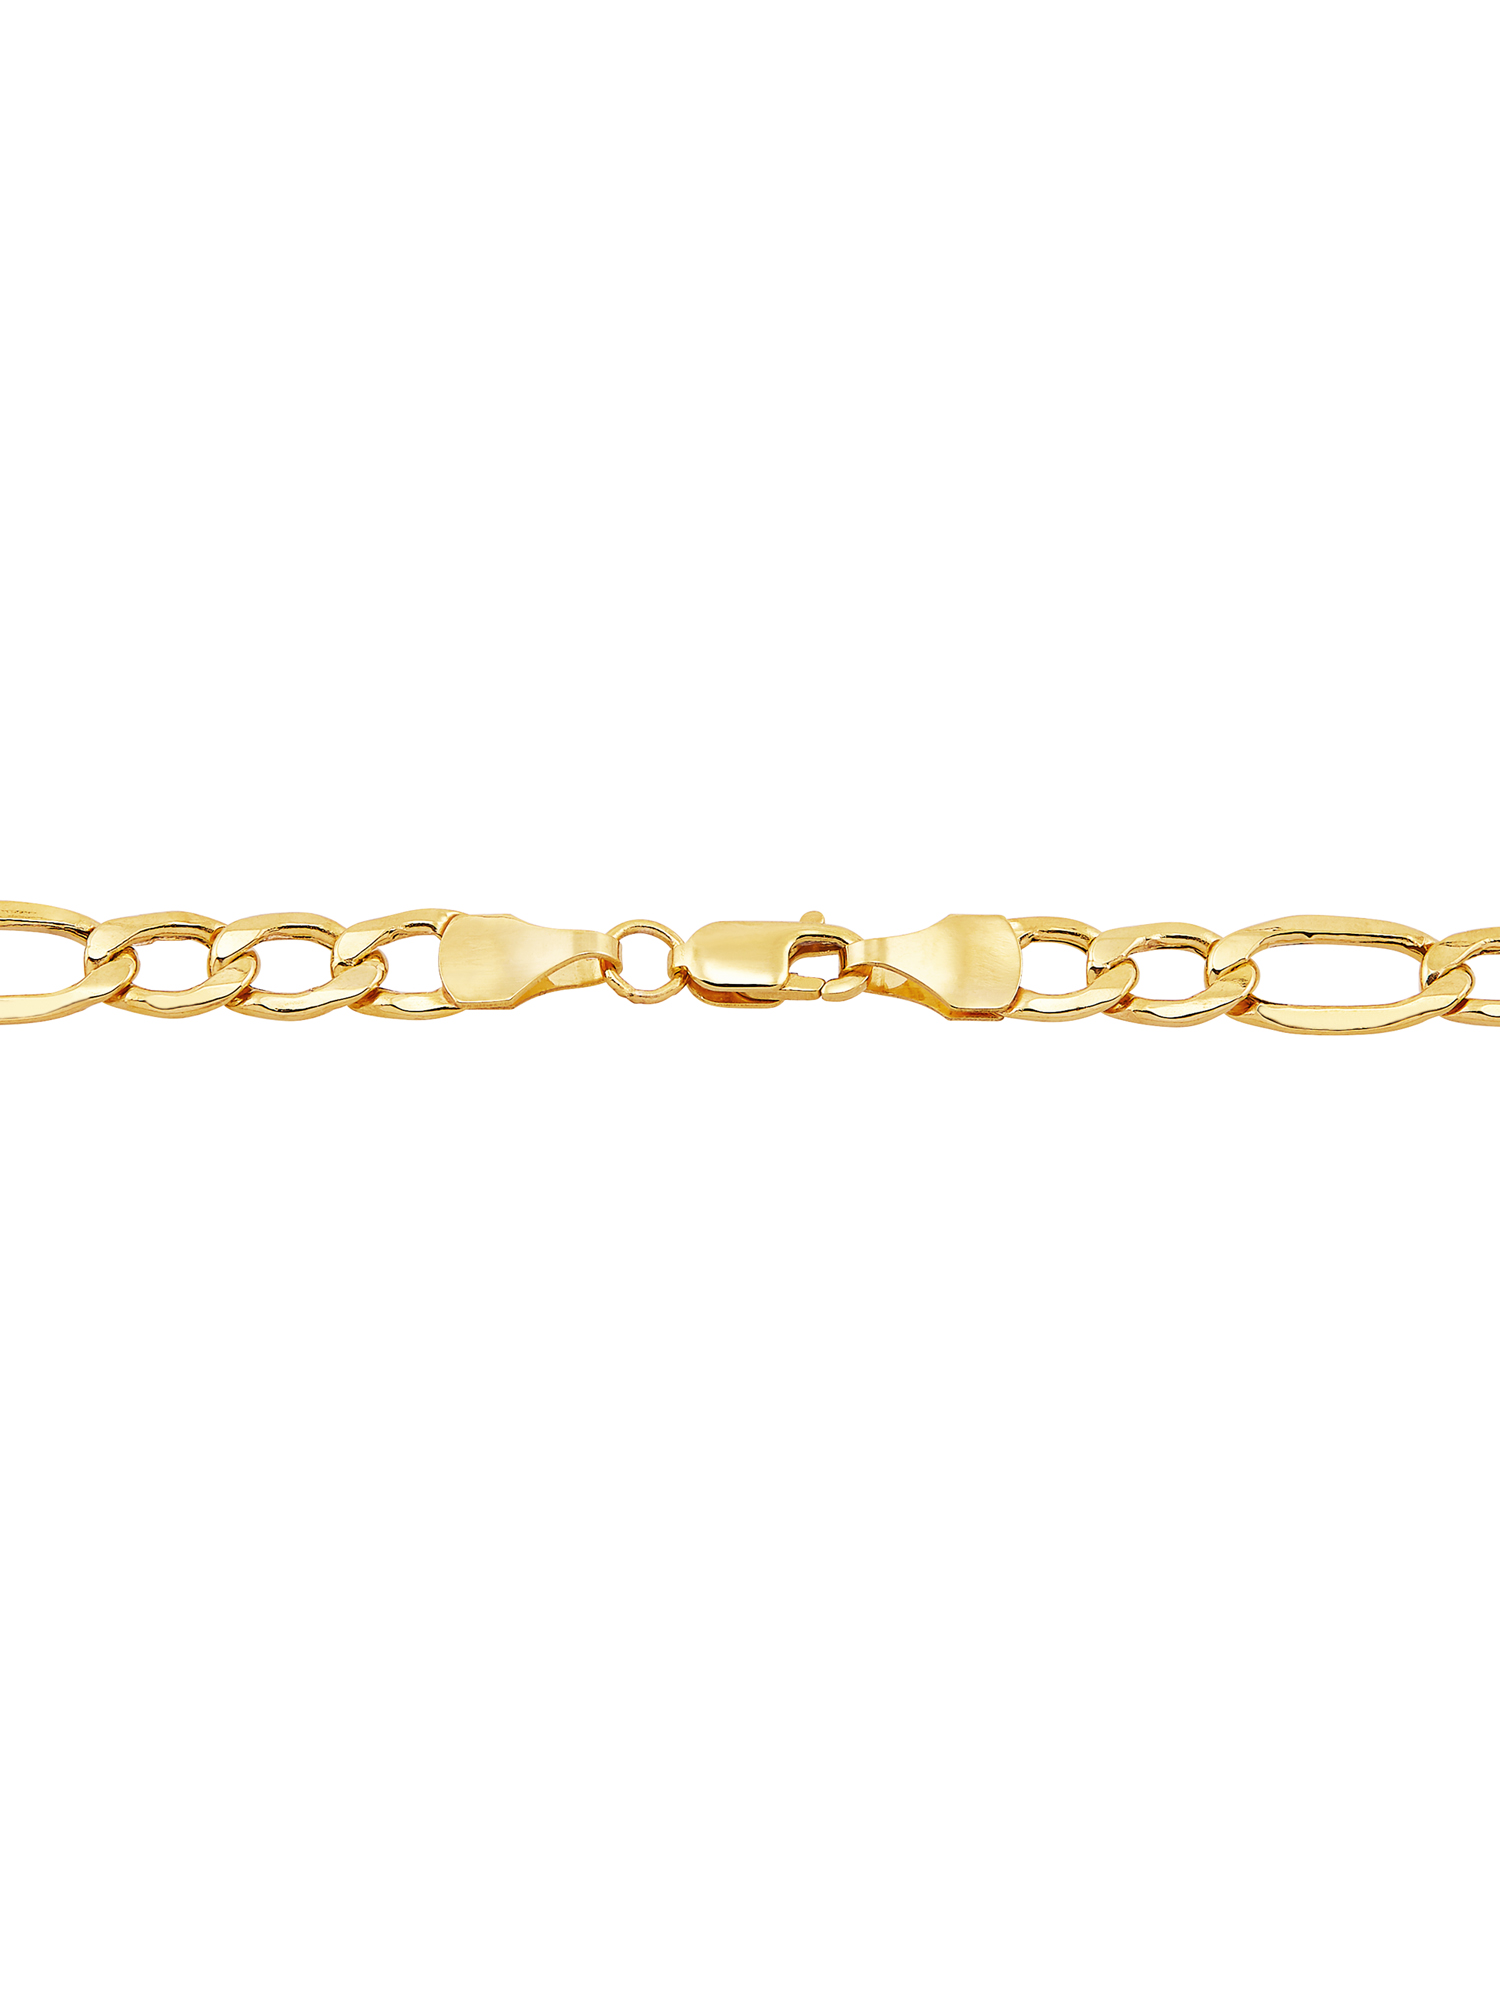 Brilliance Fine Jewelry 10K Yellow Gold 3 round 1 oval Link Figaro Bracelet, 8.5" - image 3 of 4